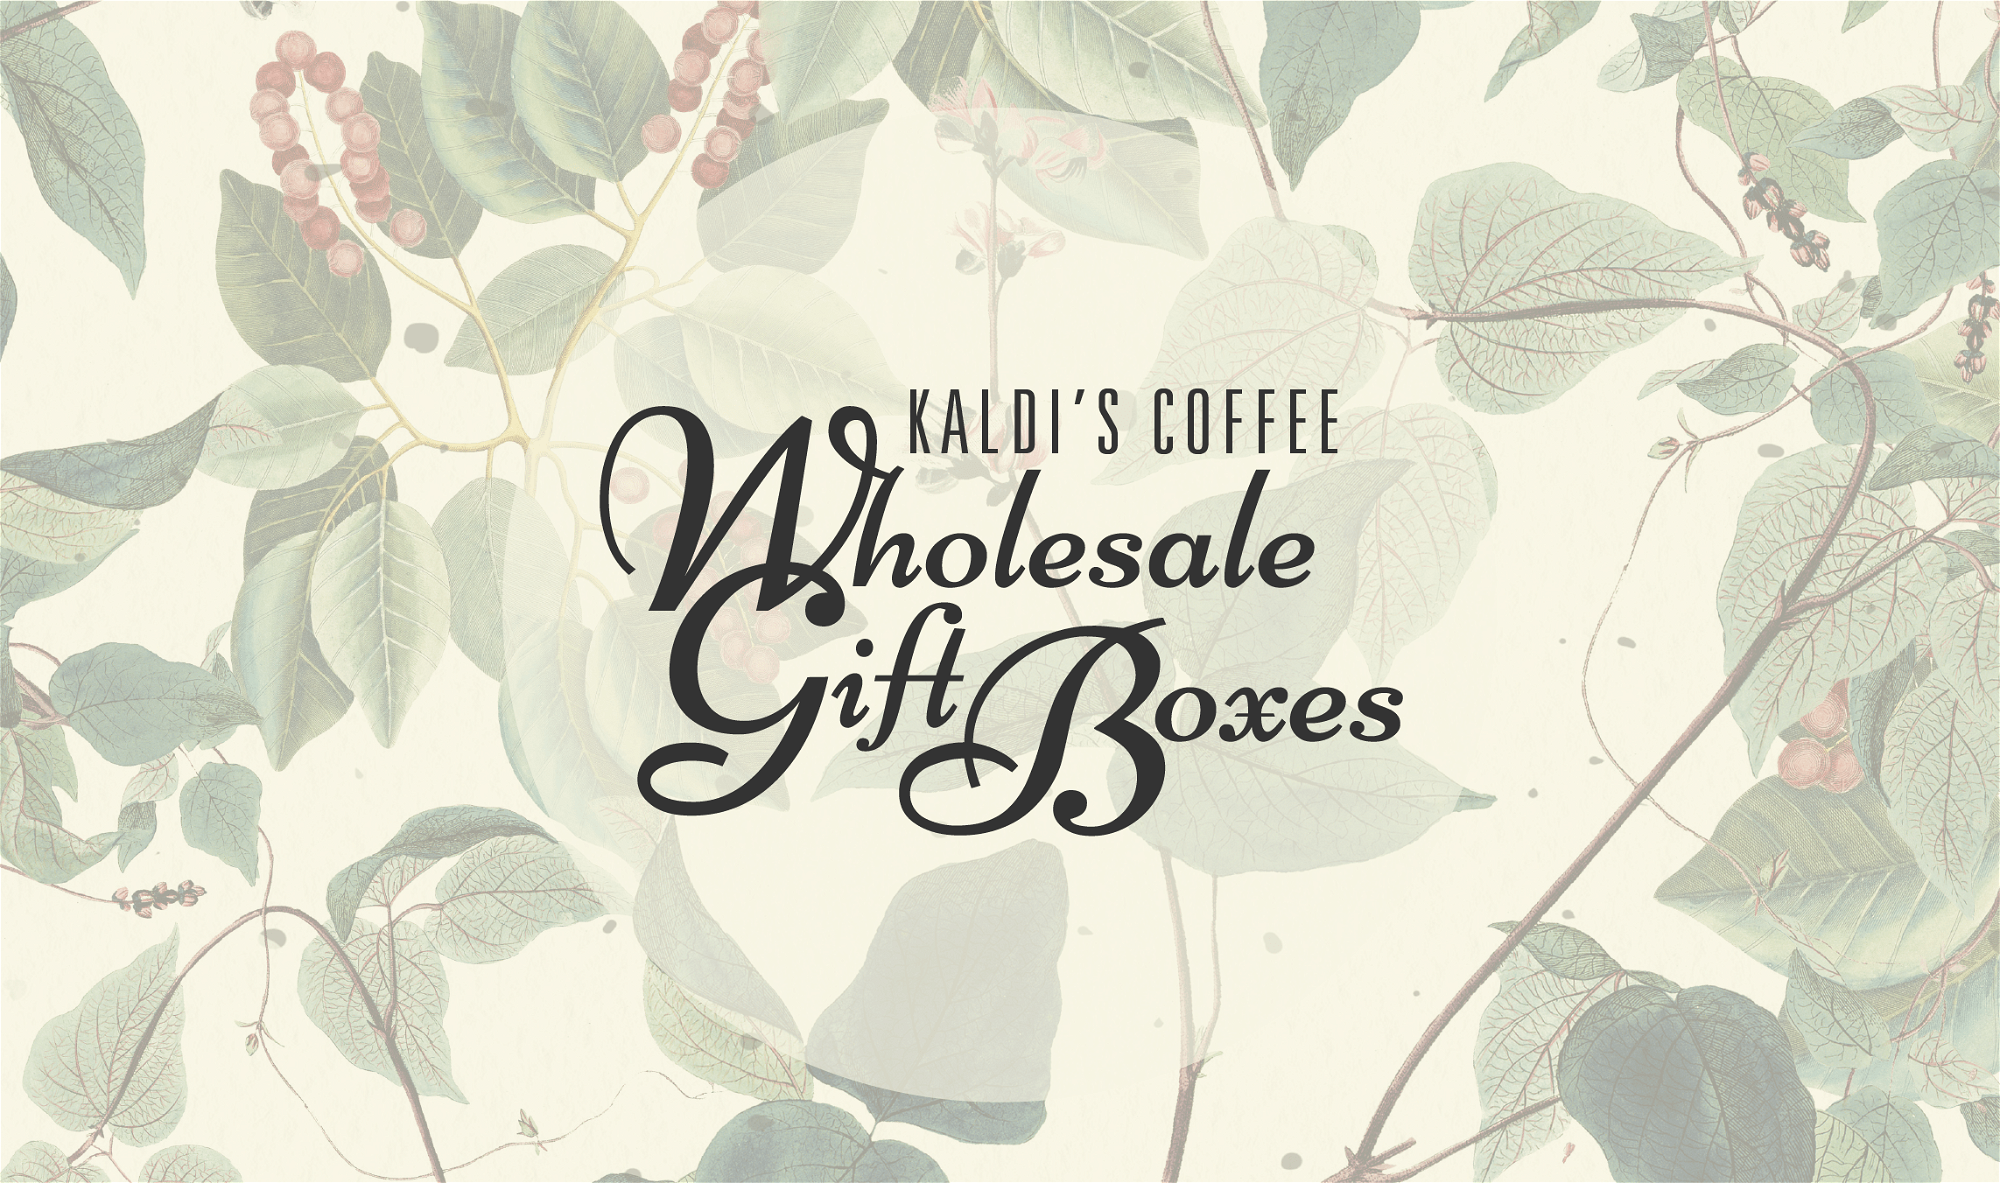 Kaldi's Coffee Wholesale Gift Boxes in St. Louis, Missouri